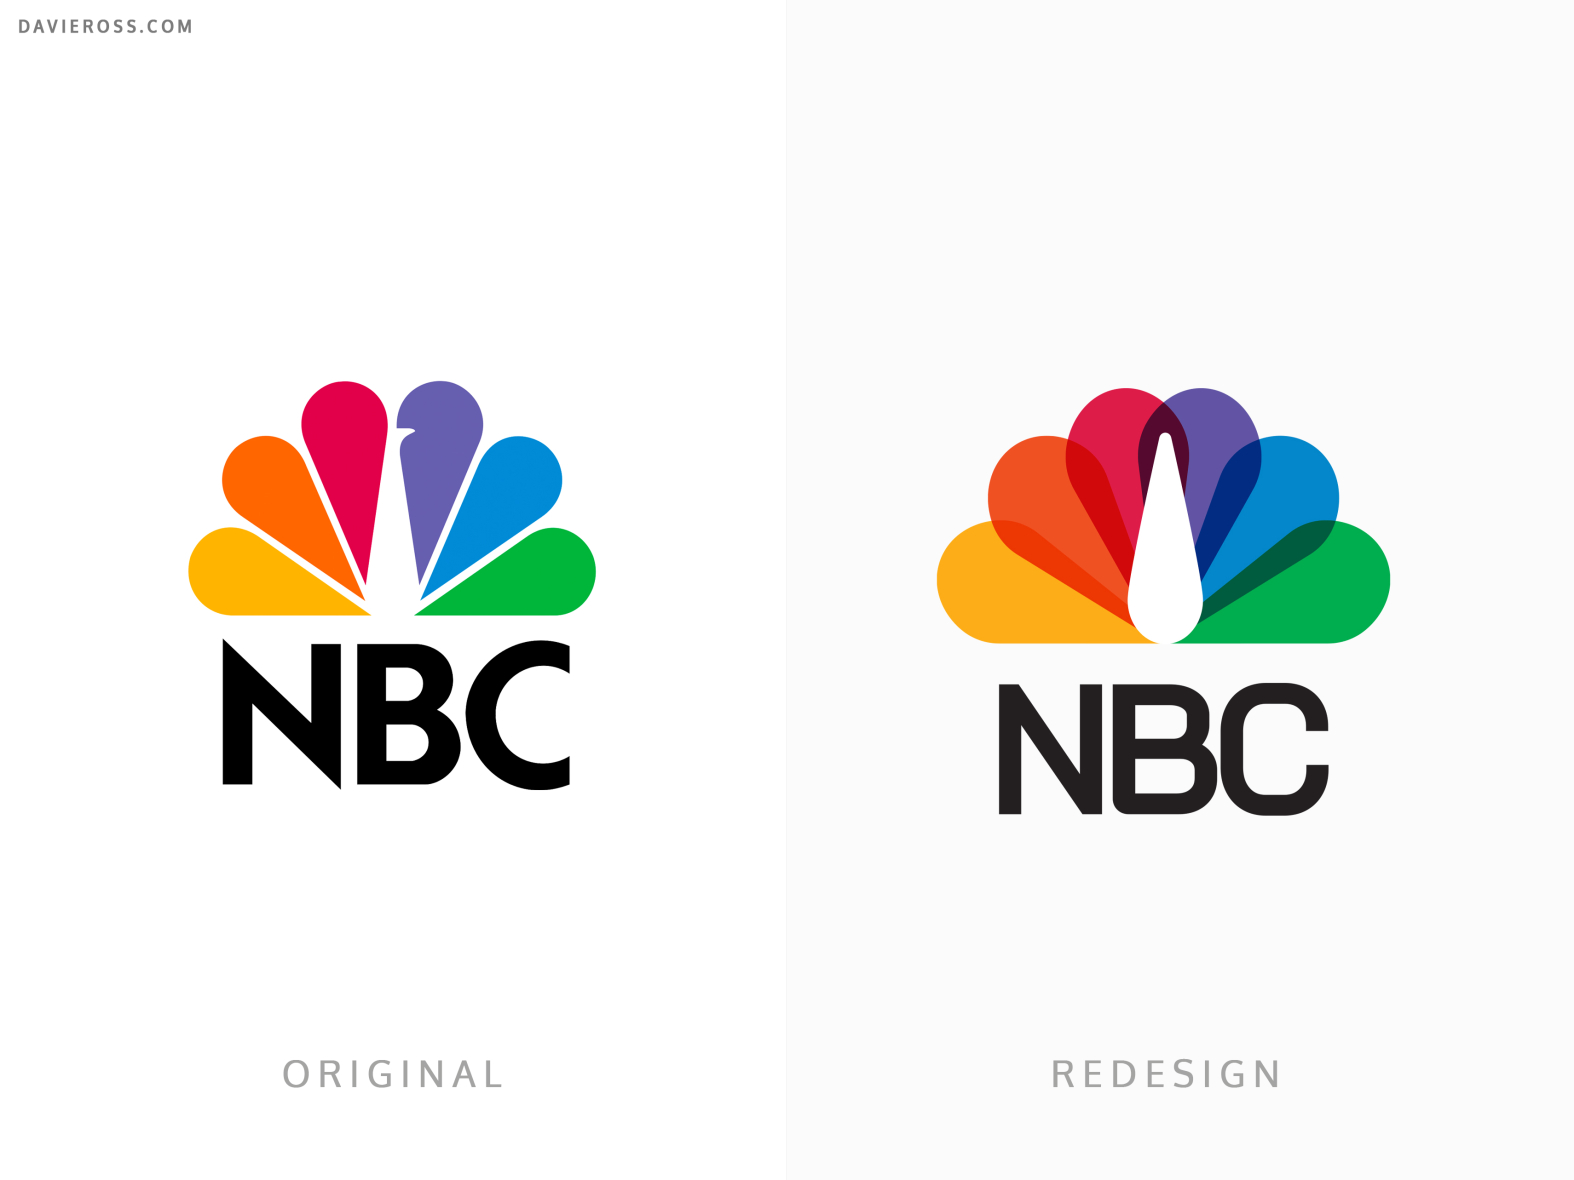 NBC Logo Redesign by Davie Ross on Dribbble